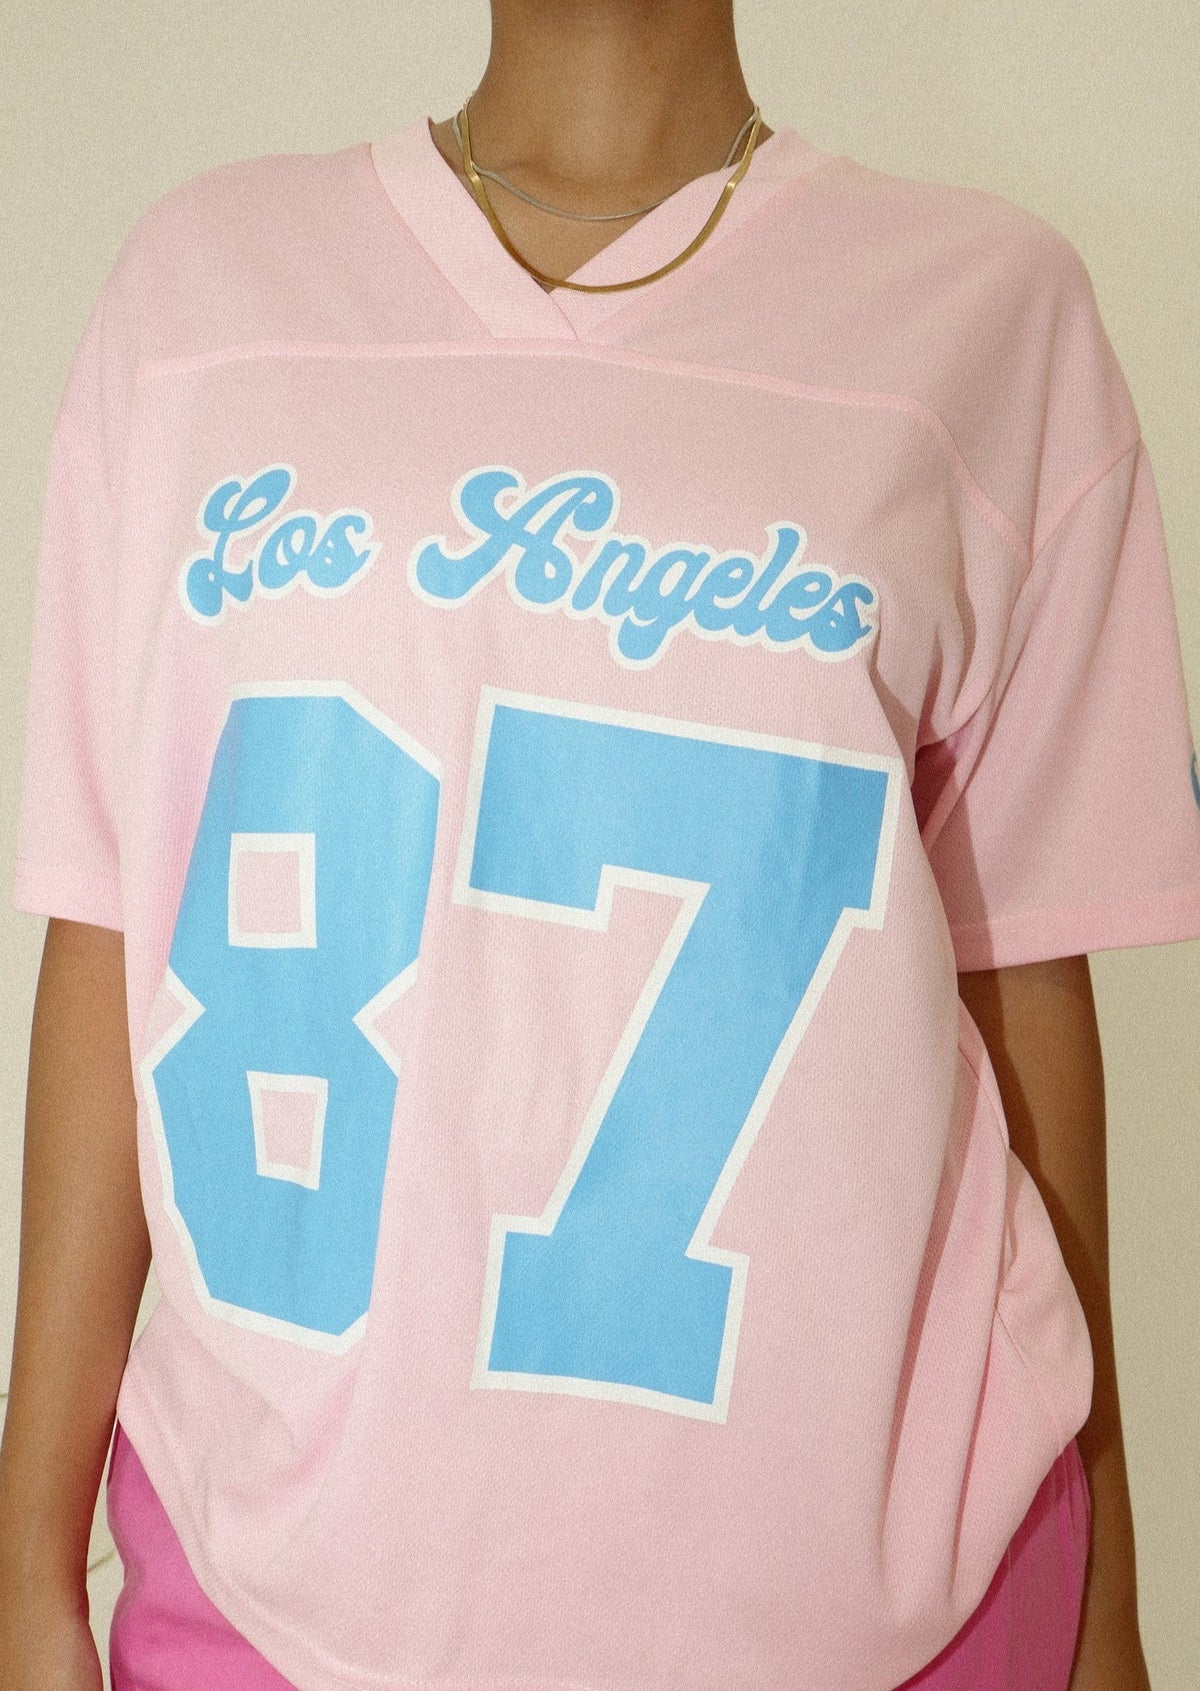 Los Angeles Pink 87 Jersey